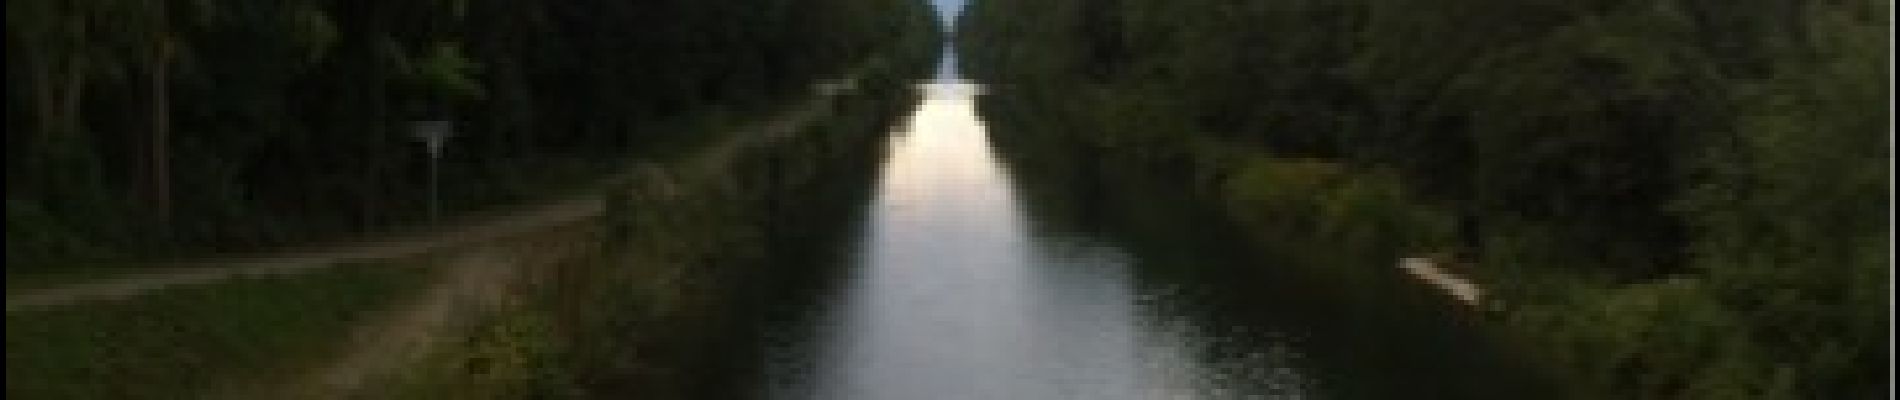 POI Artzenheim - Le canal de Colmar - Photo